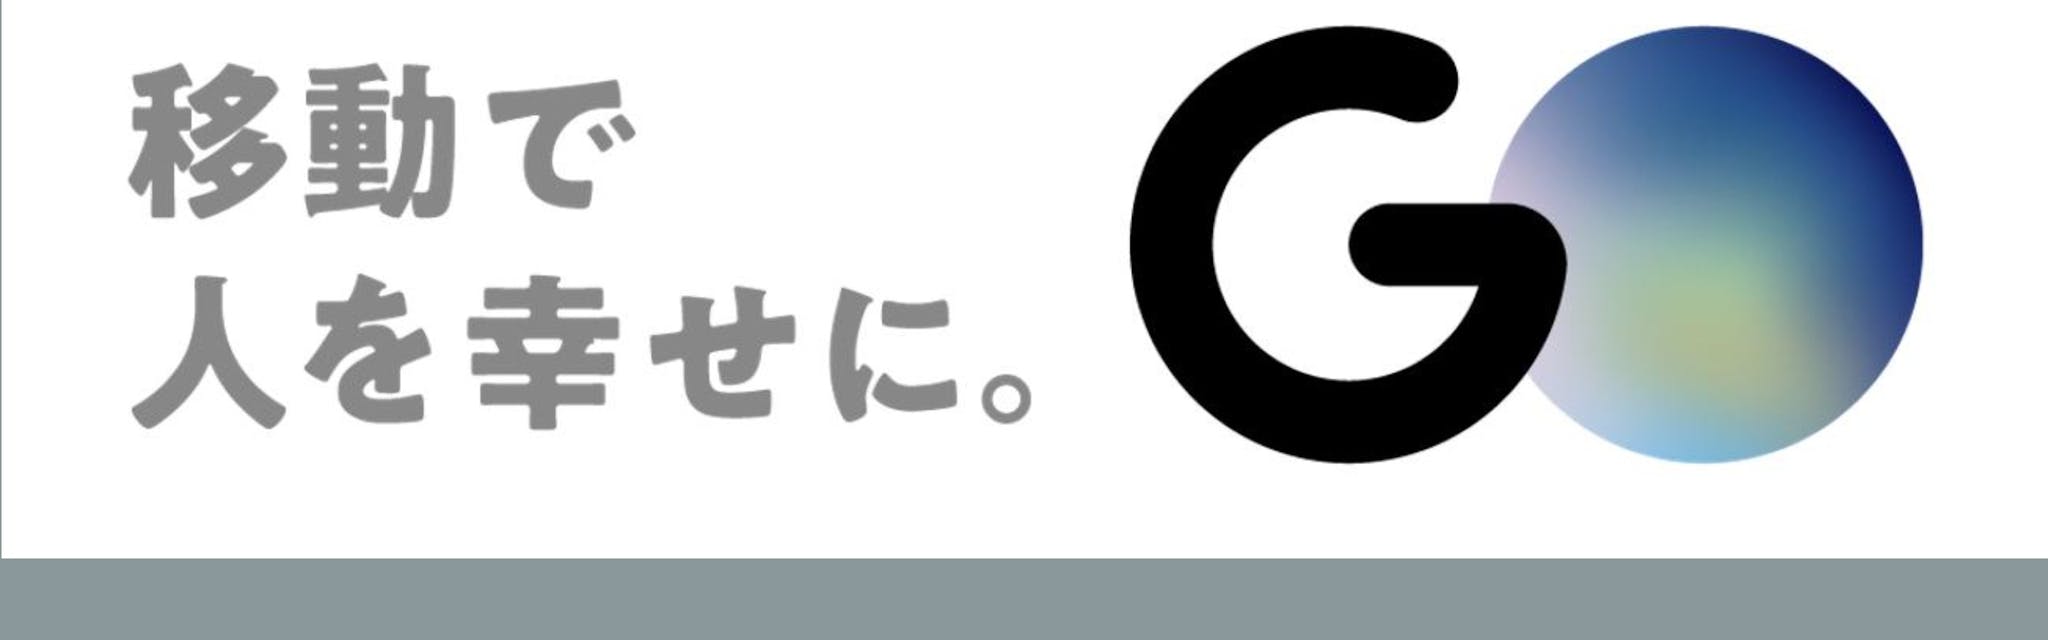 GO株式会社 - カバー画像